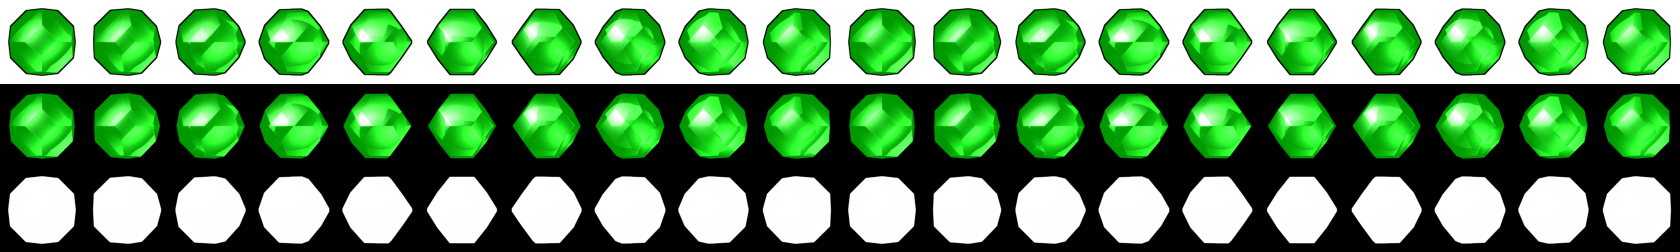 Bejeweled 2 - Emerald